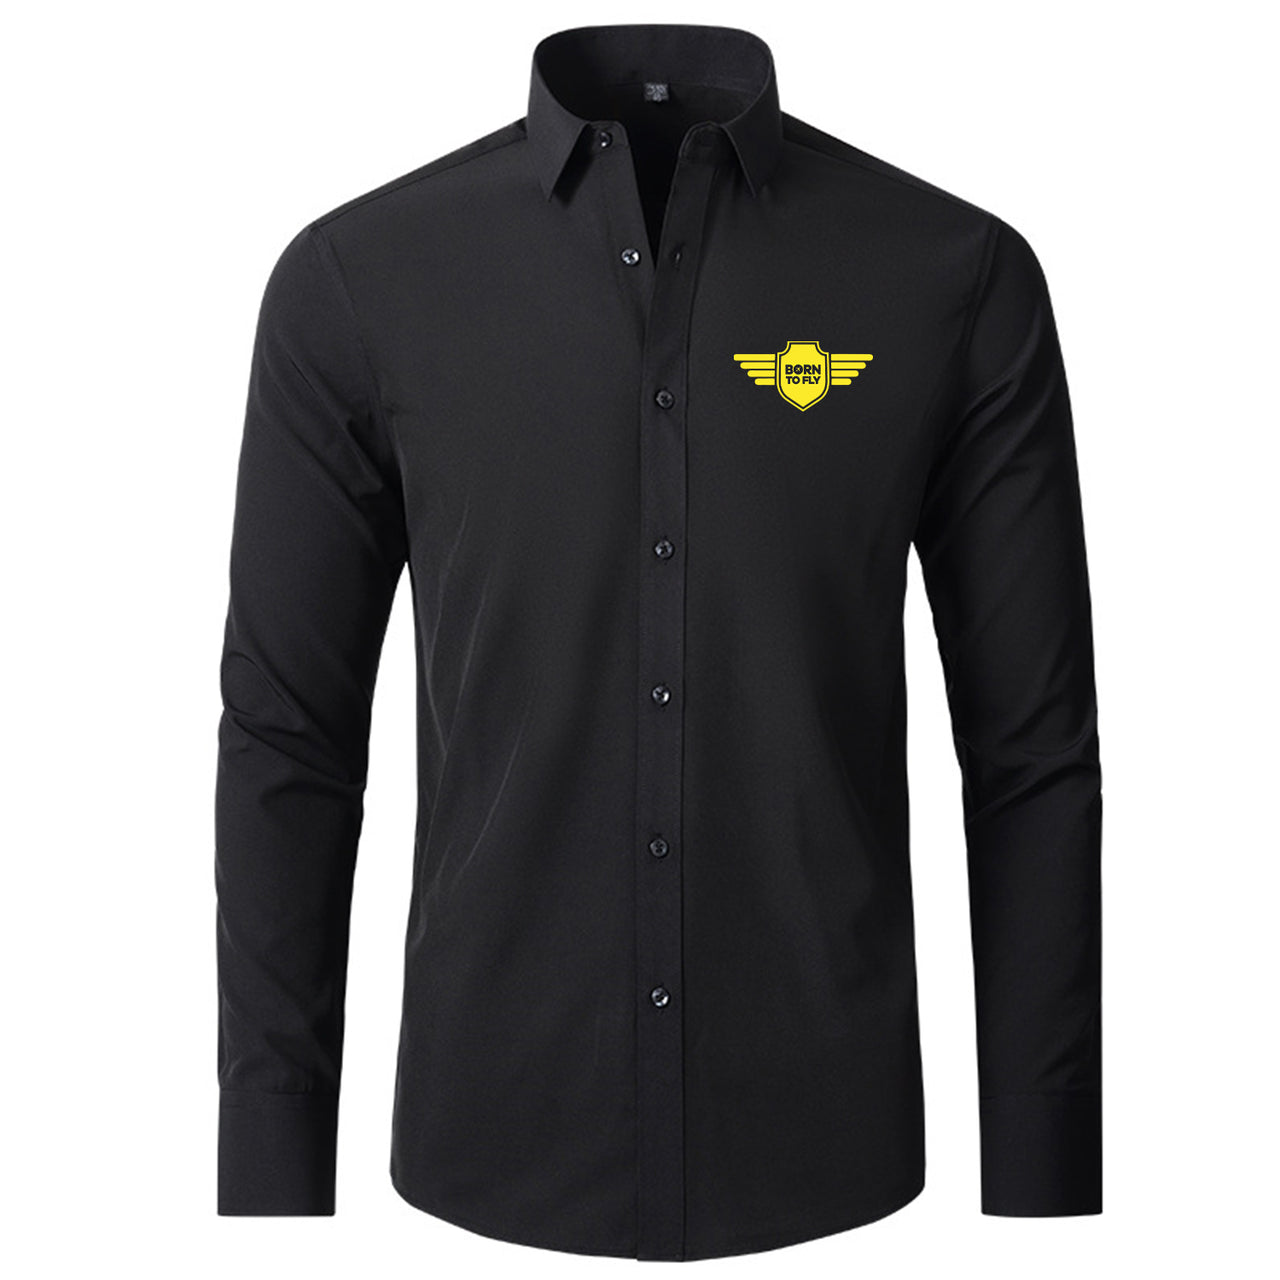 Born To Fly & Badge Designed Long Sleeve Shirts